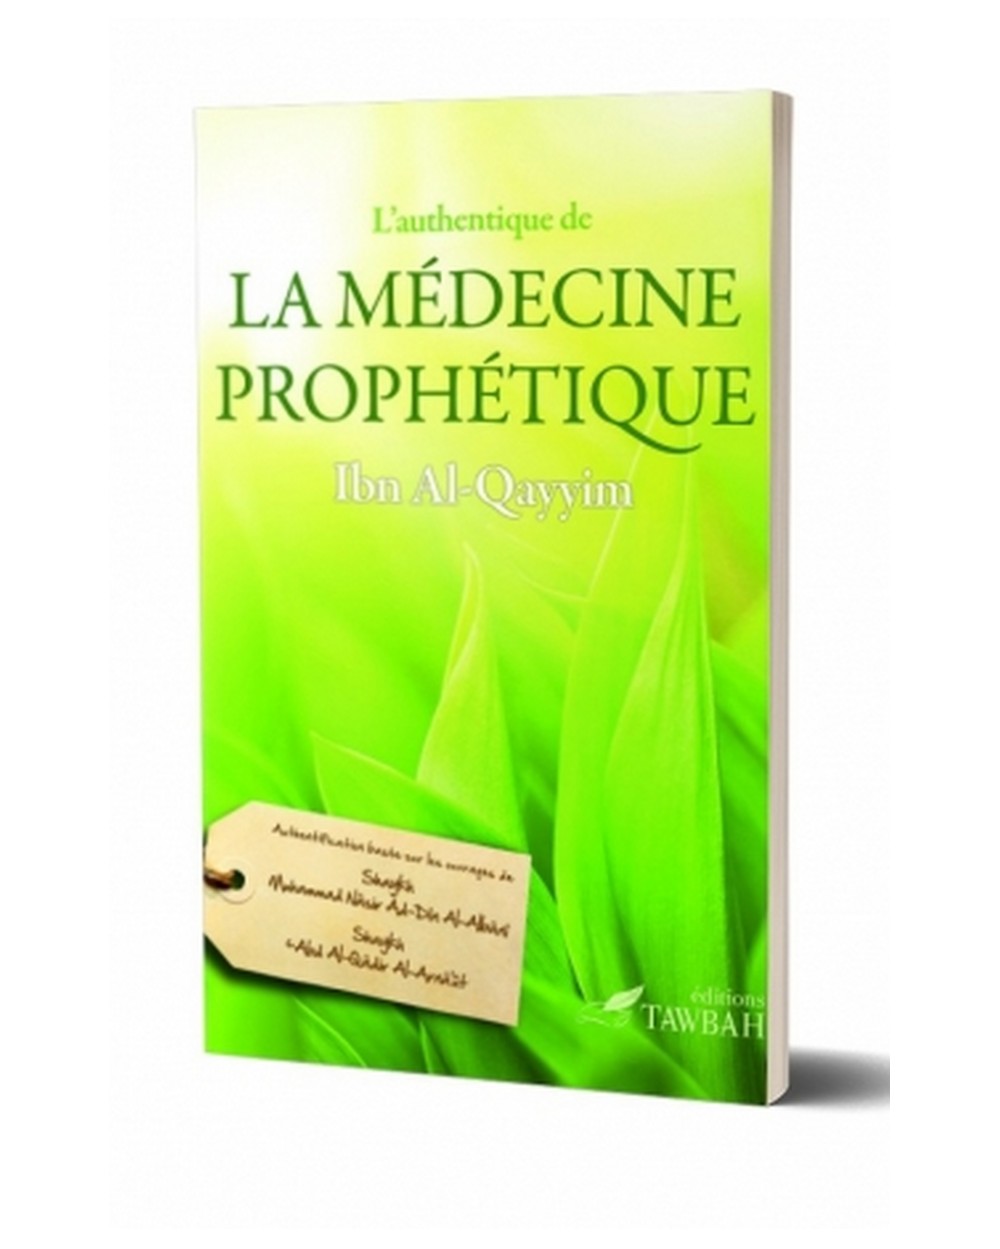 La médecine prophétique - Ibn Al Qayyim - Edition Tawbah